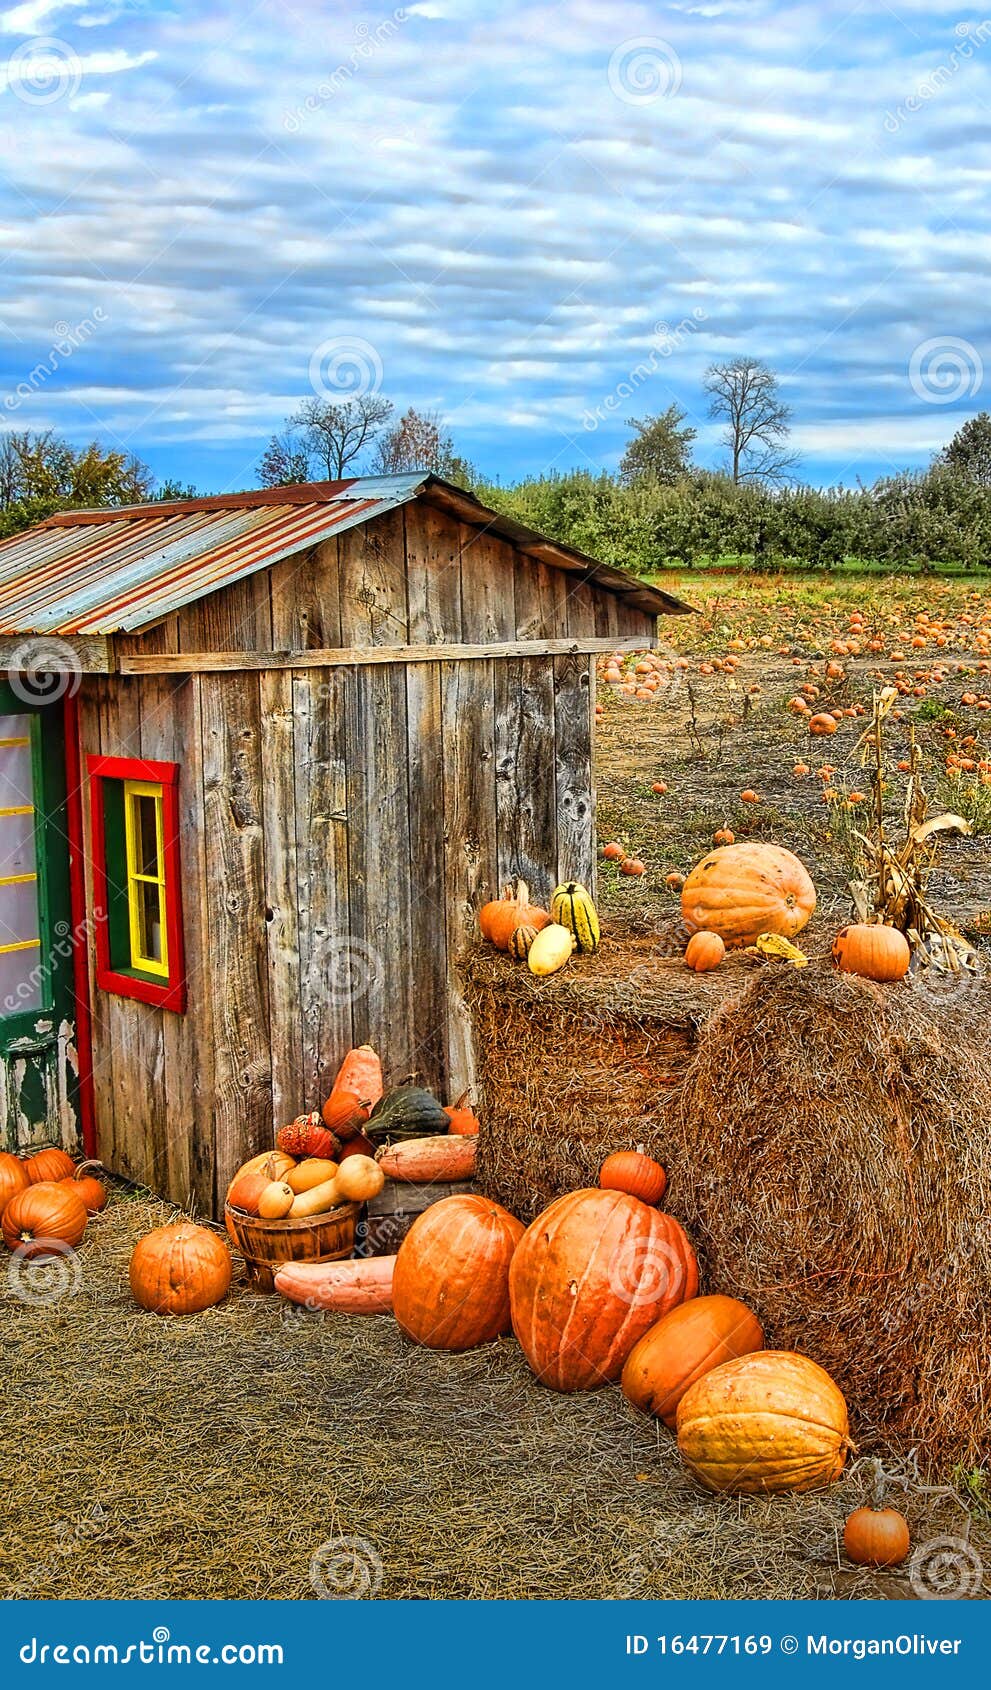 Pumpkin Harvest Season on the Farm Stock Image - Image of farm, pick ...